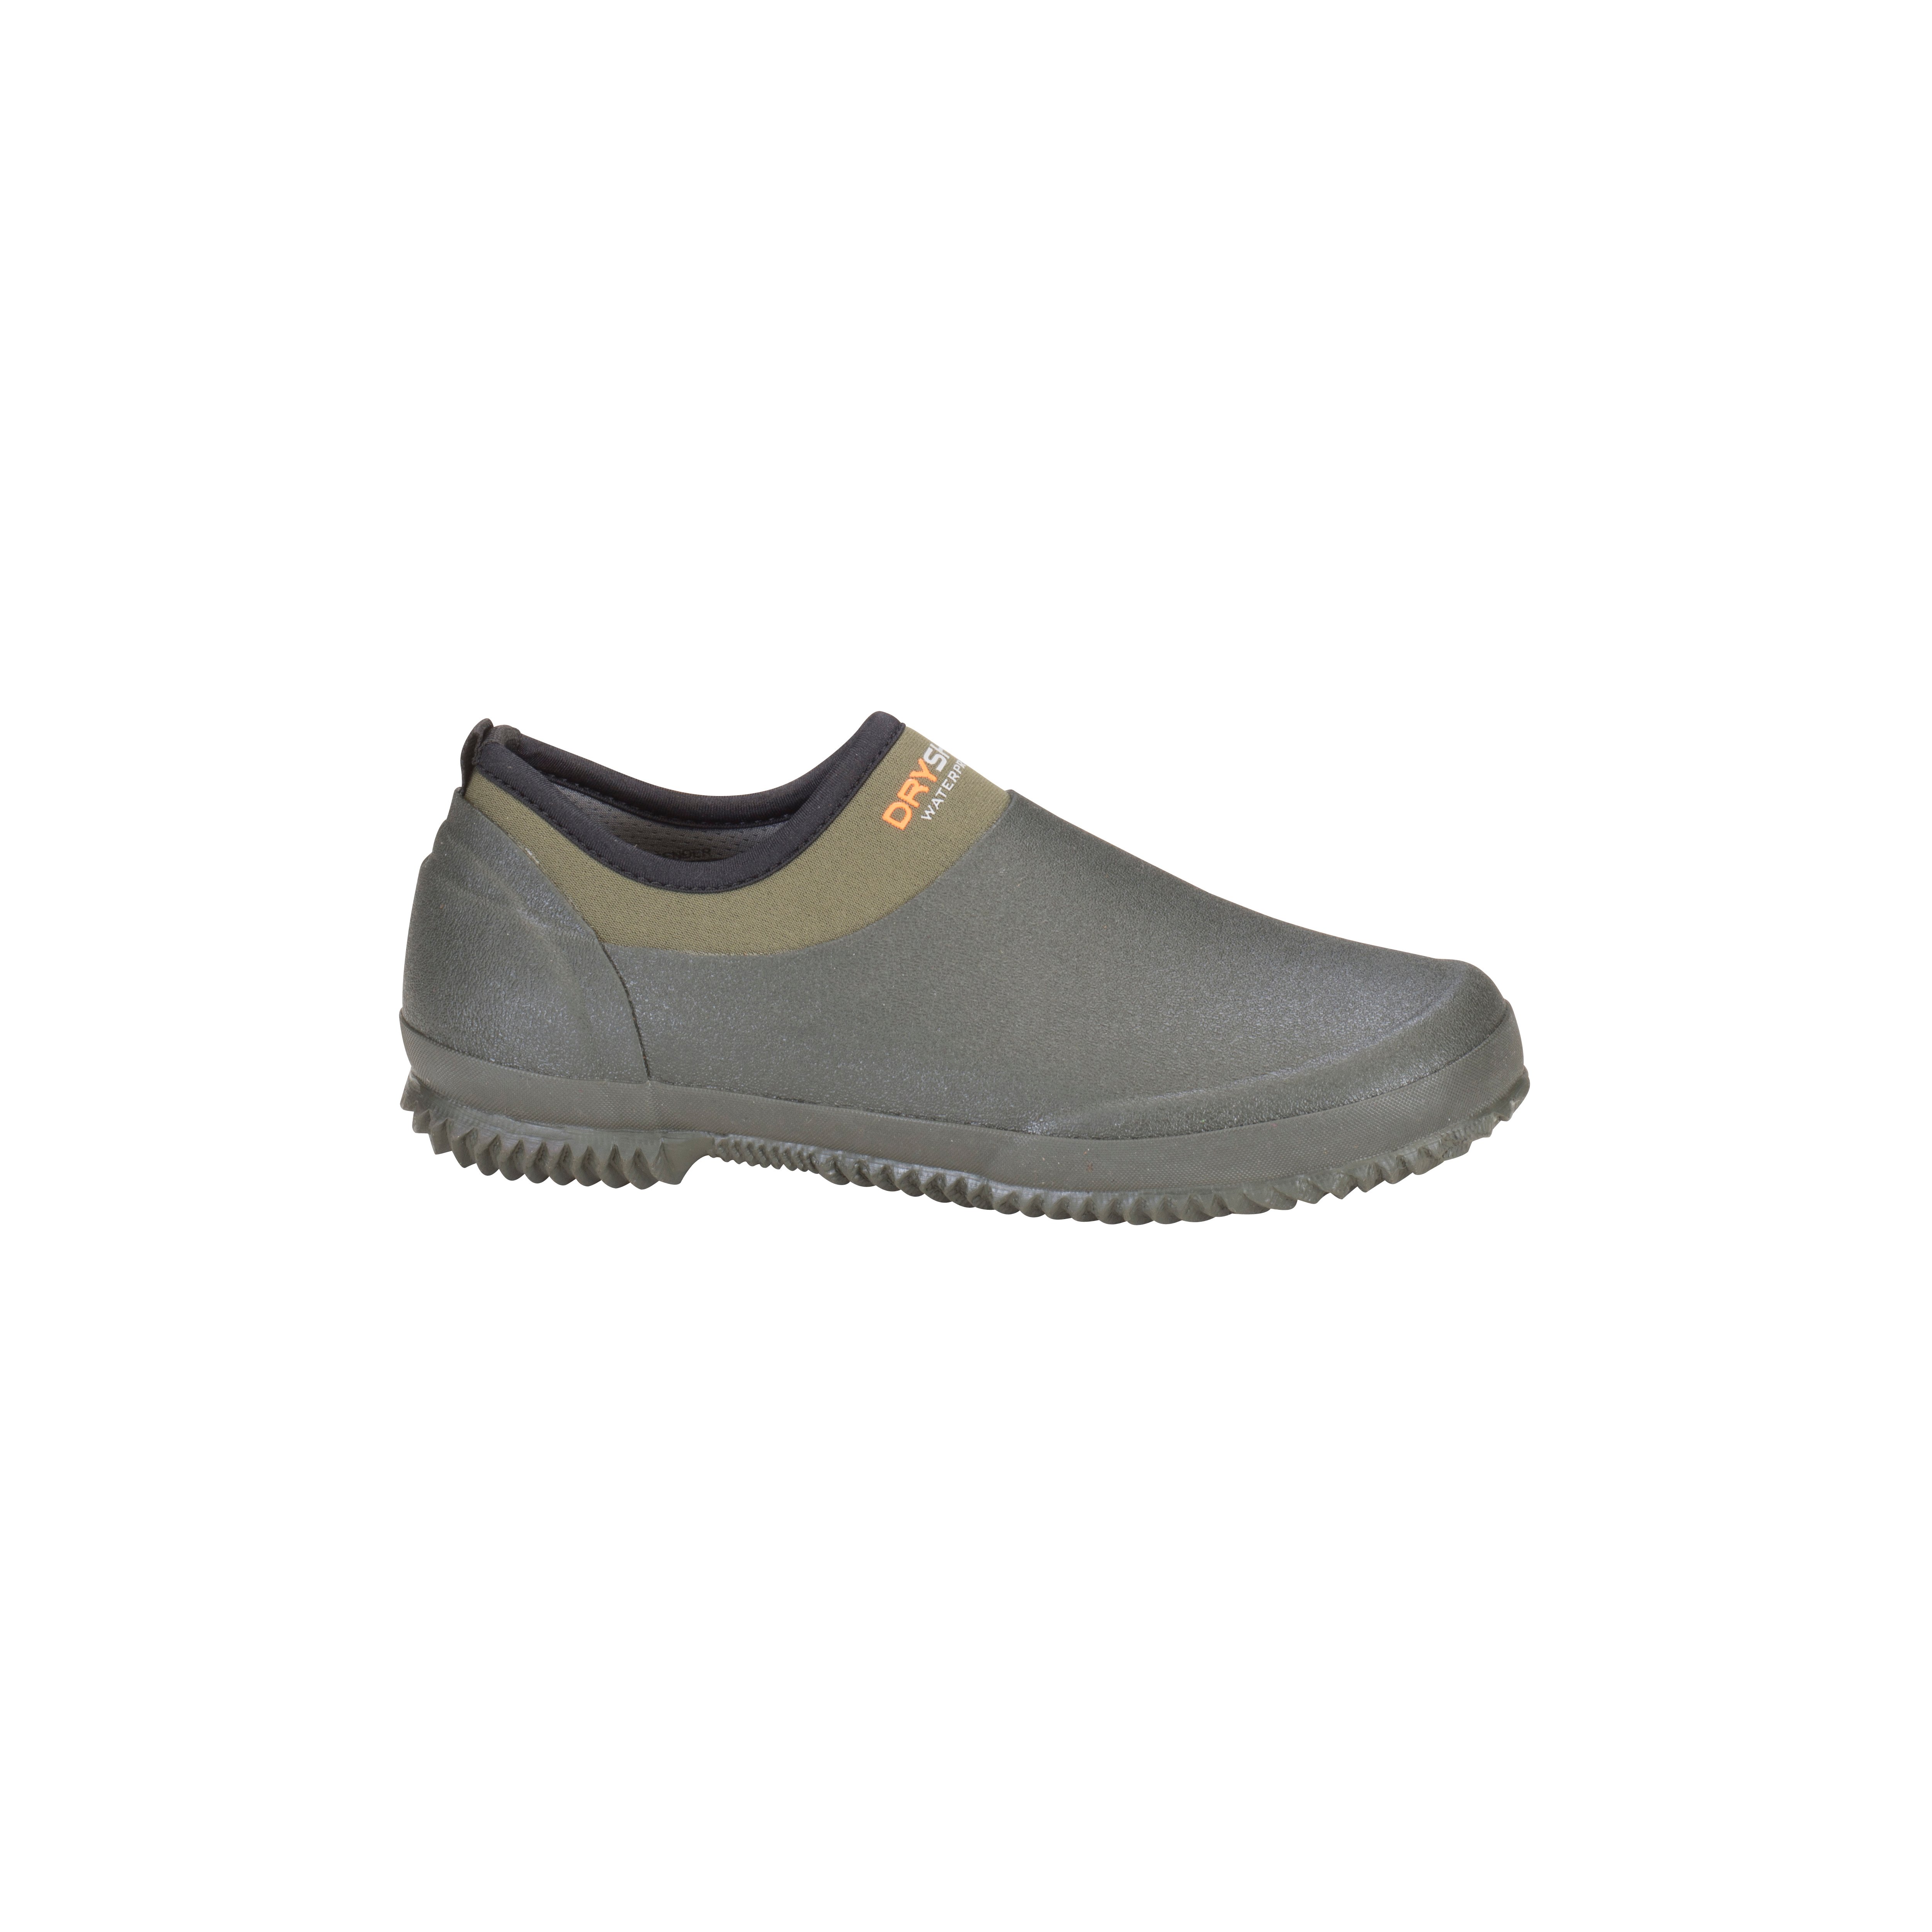 Lawn & Garden – Dryshod Waterproof Boots